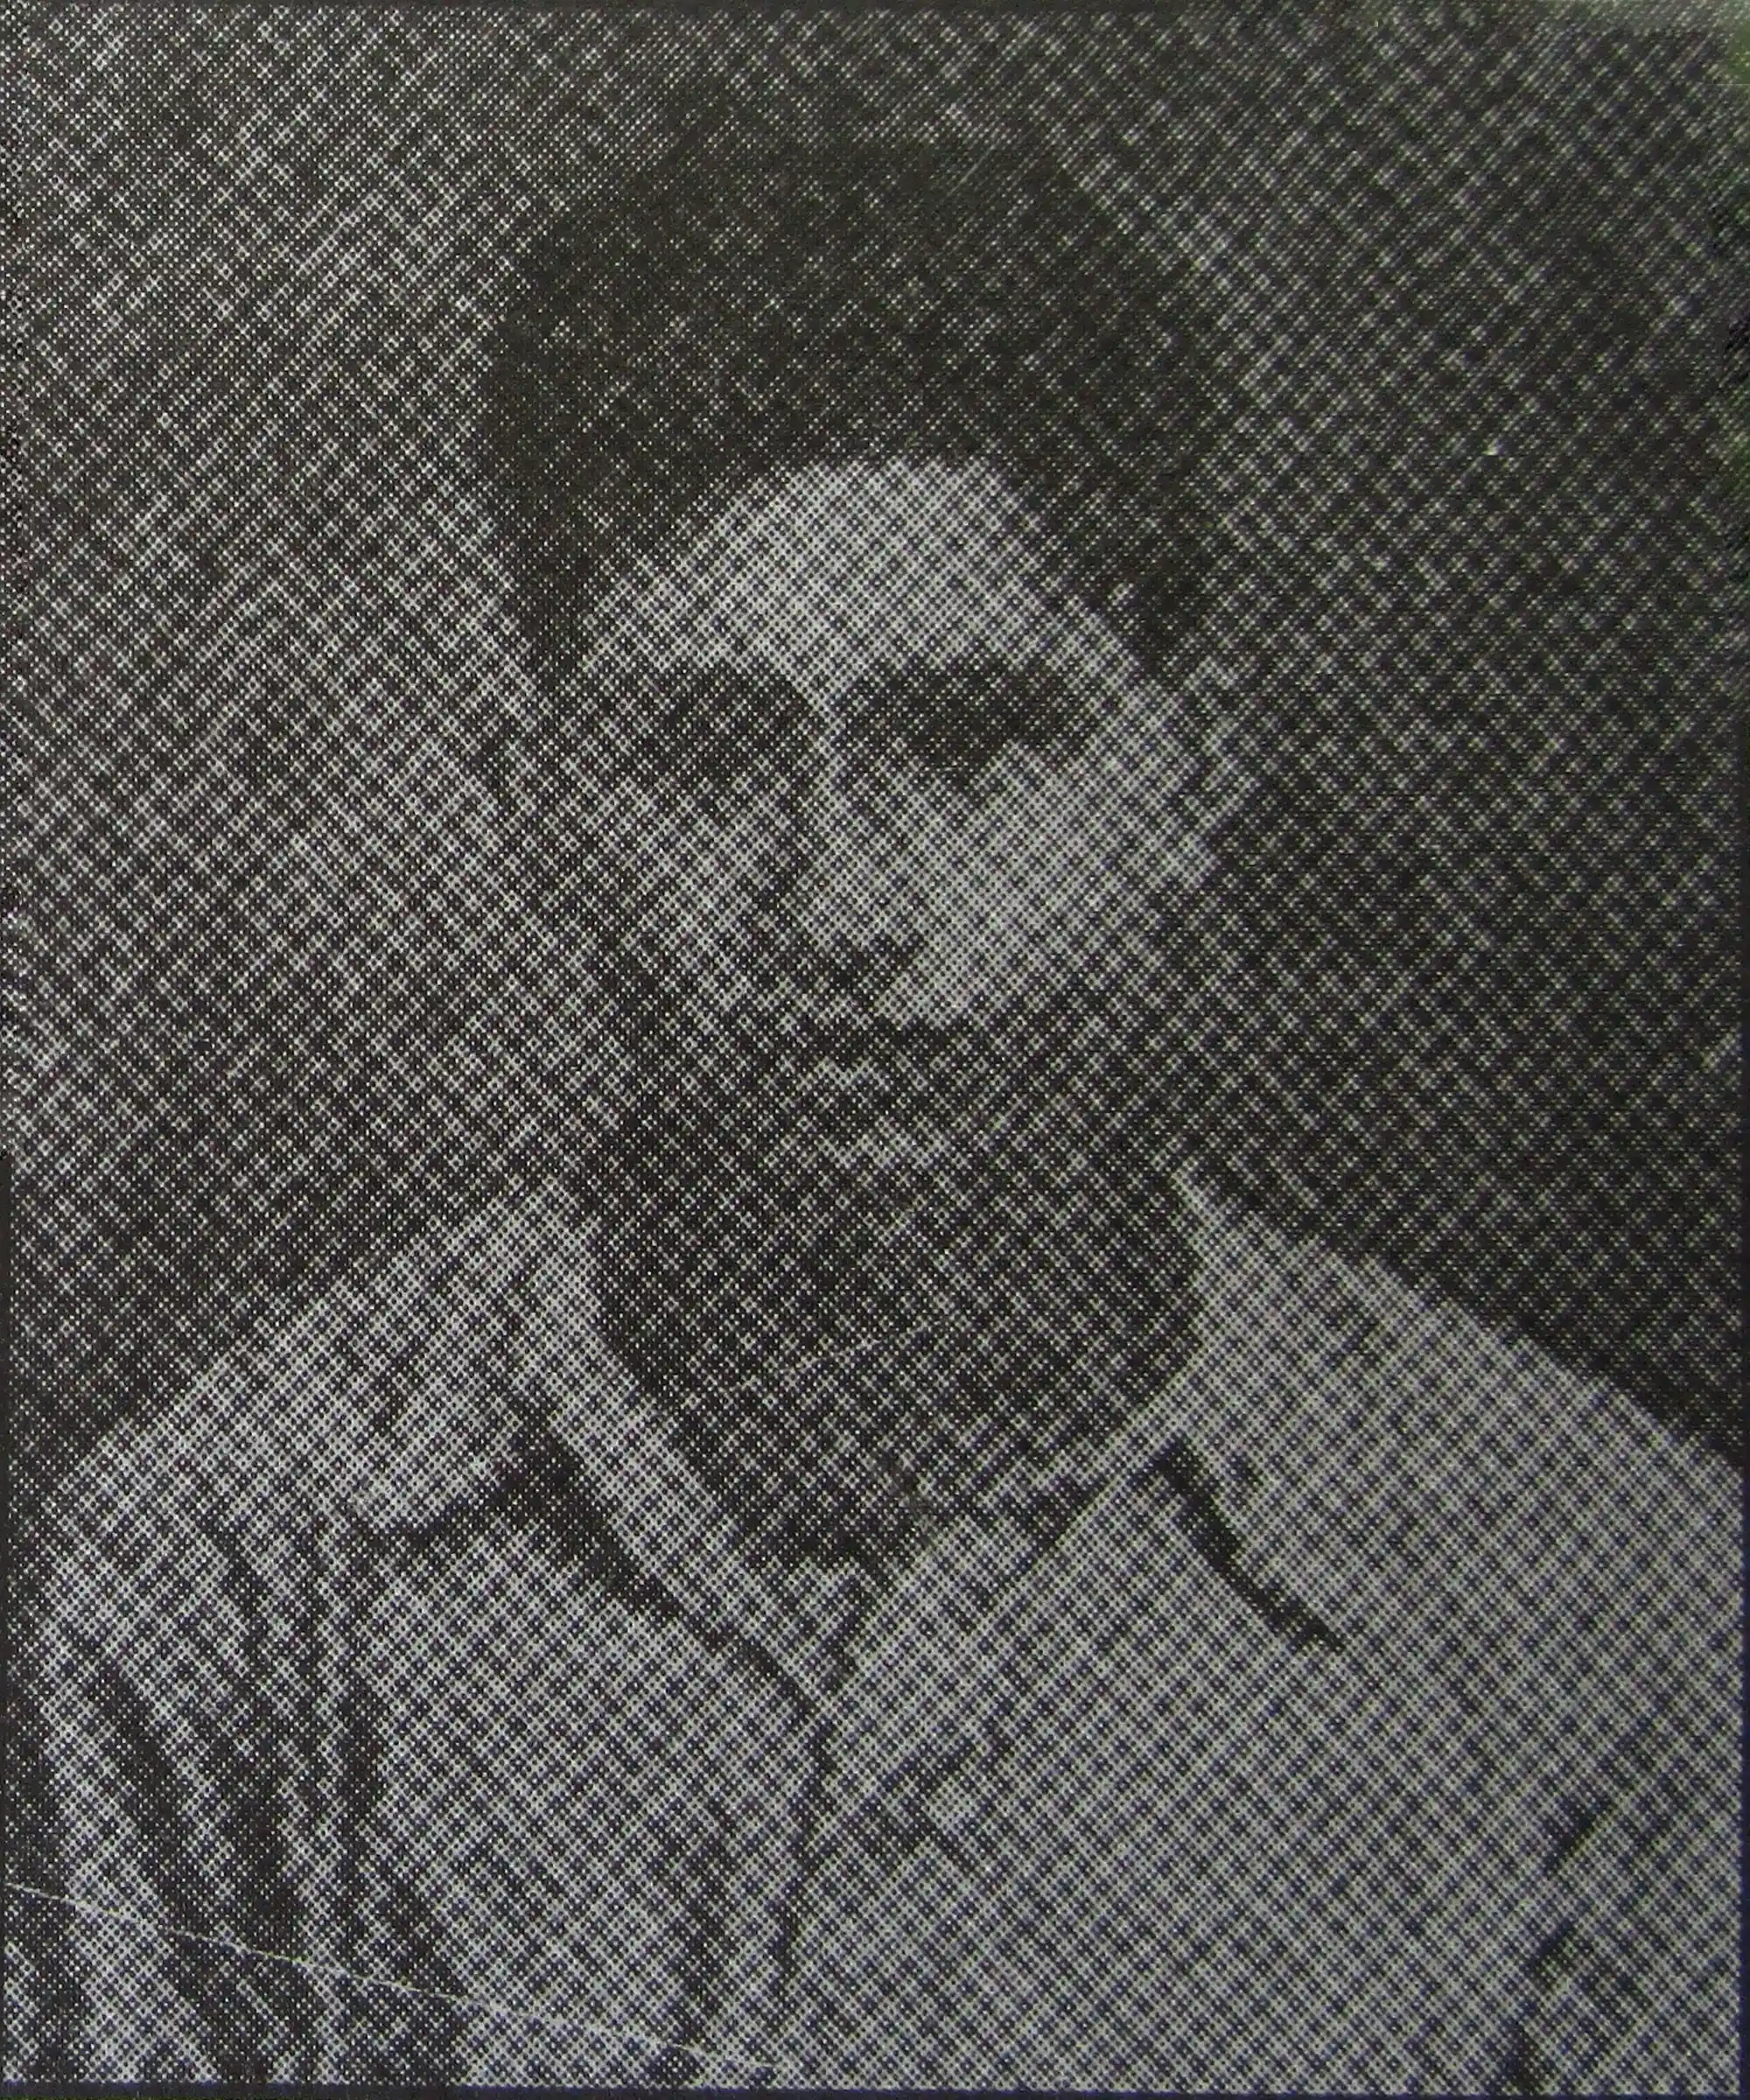 Young revolutionary- Harigopal Bal; Source: Wikimedia Commons